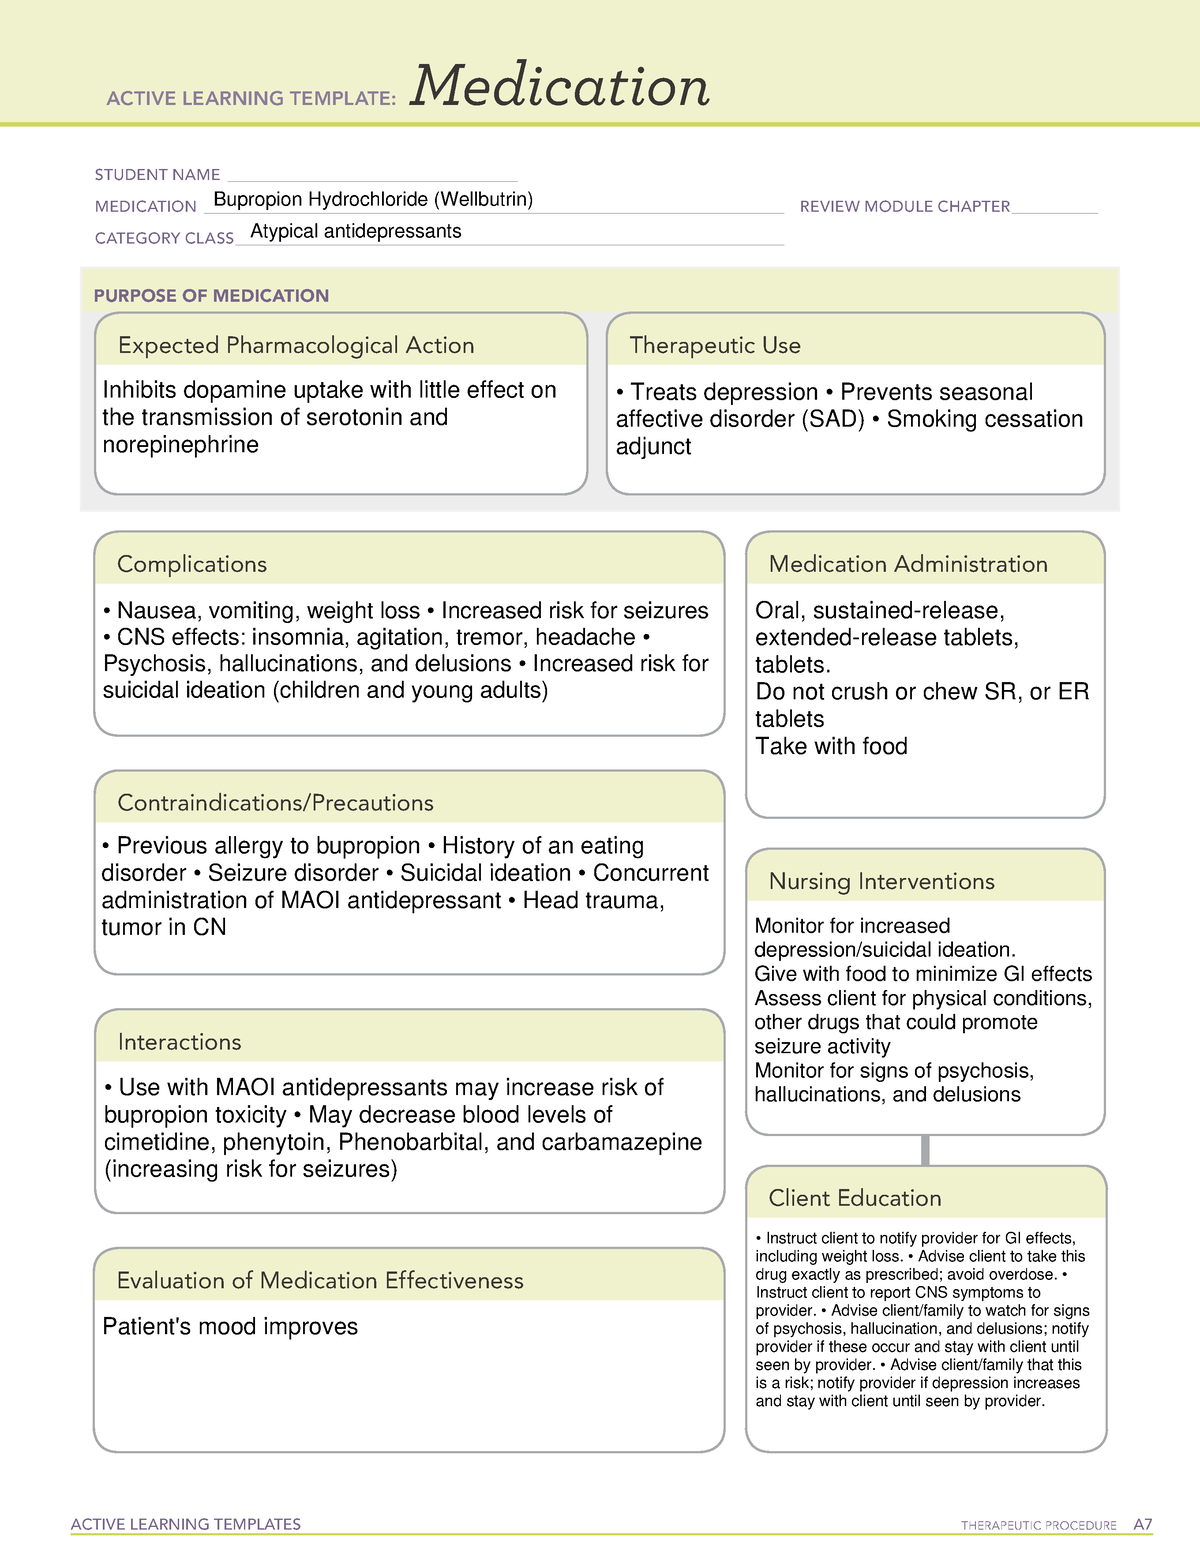 ATI Bupropion Hydrochloride Wellbutrin Medication Sheet ACTIVE LEARNING TEMPLATES